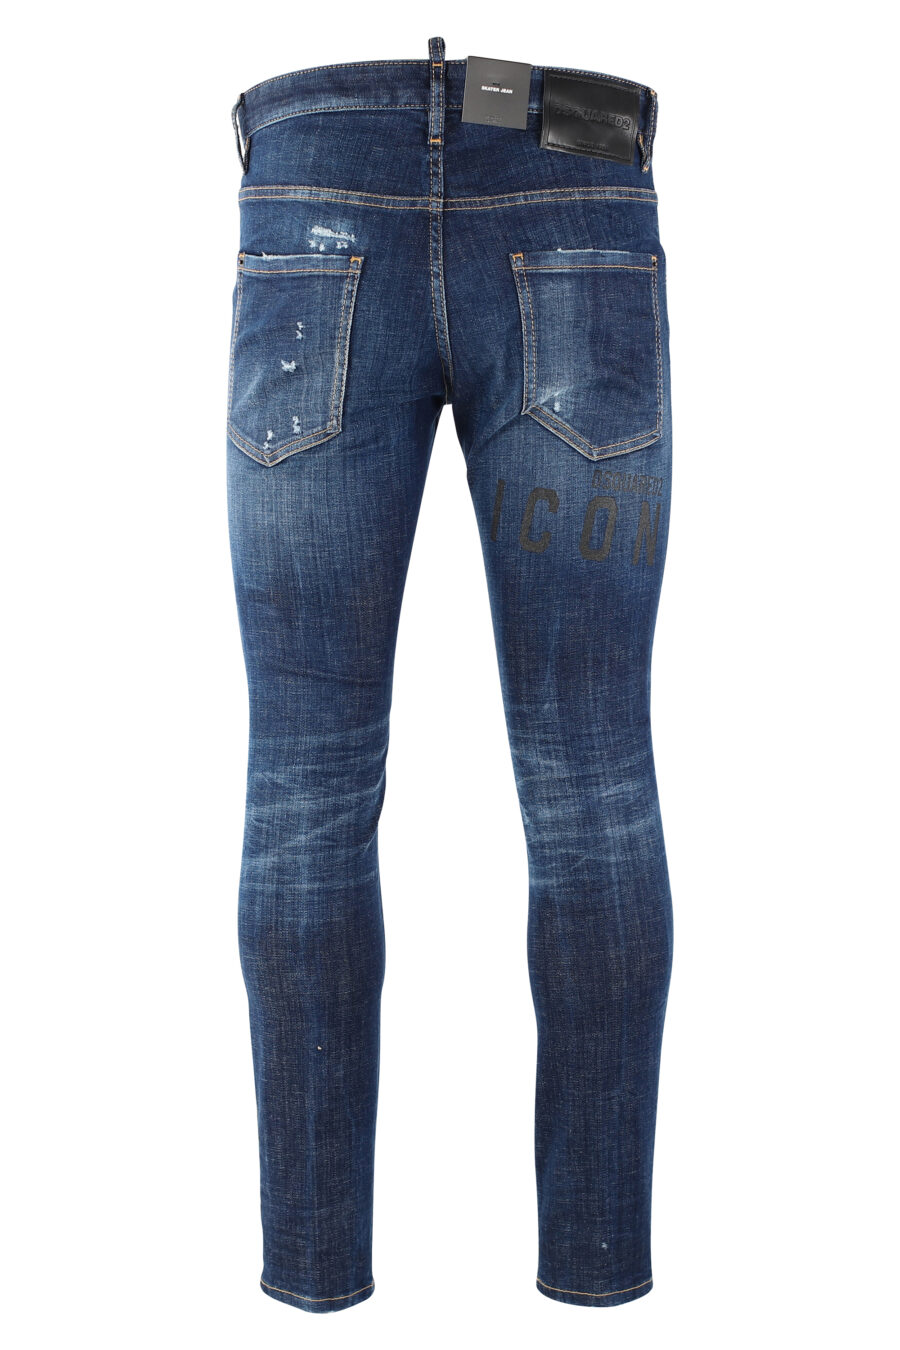 Dsquared2 - Icon skater jean dark blue semi-worn jeans - BLS Fashion